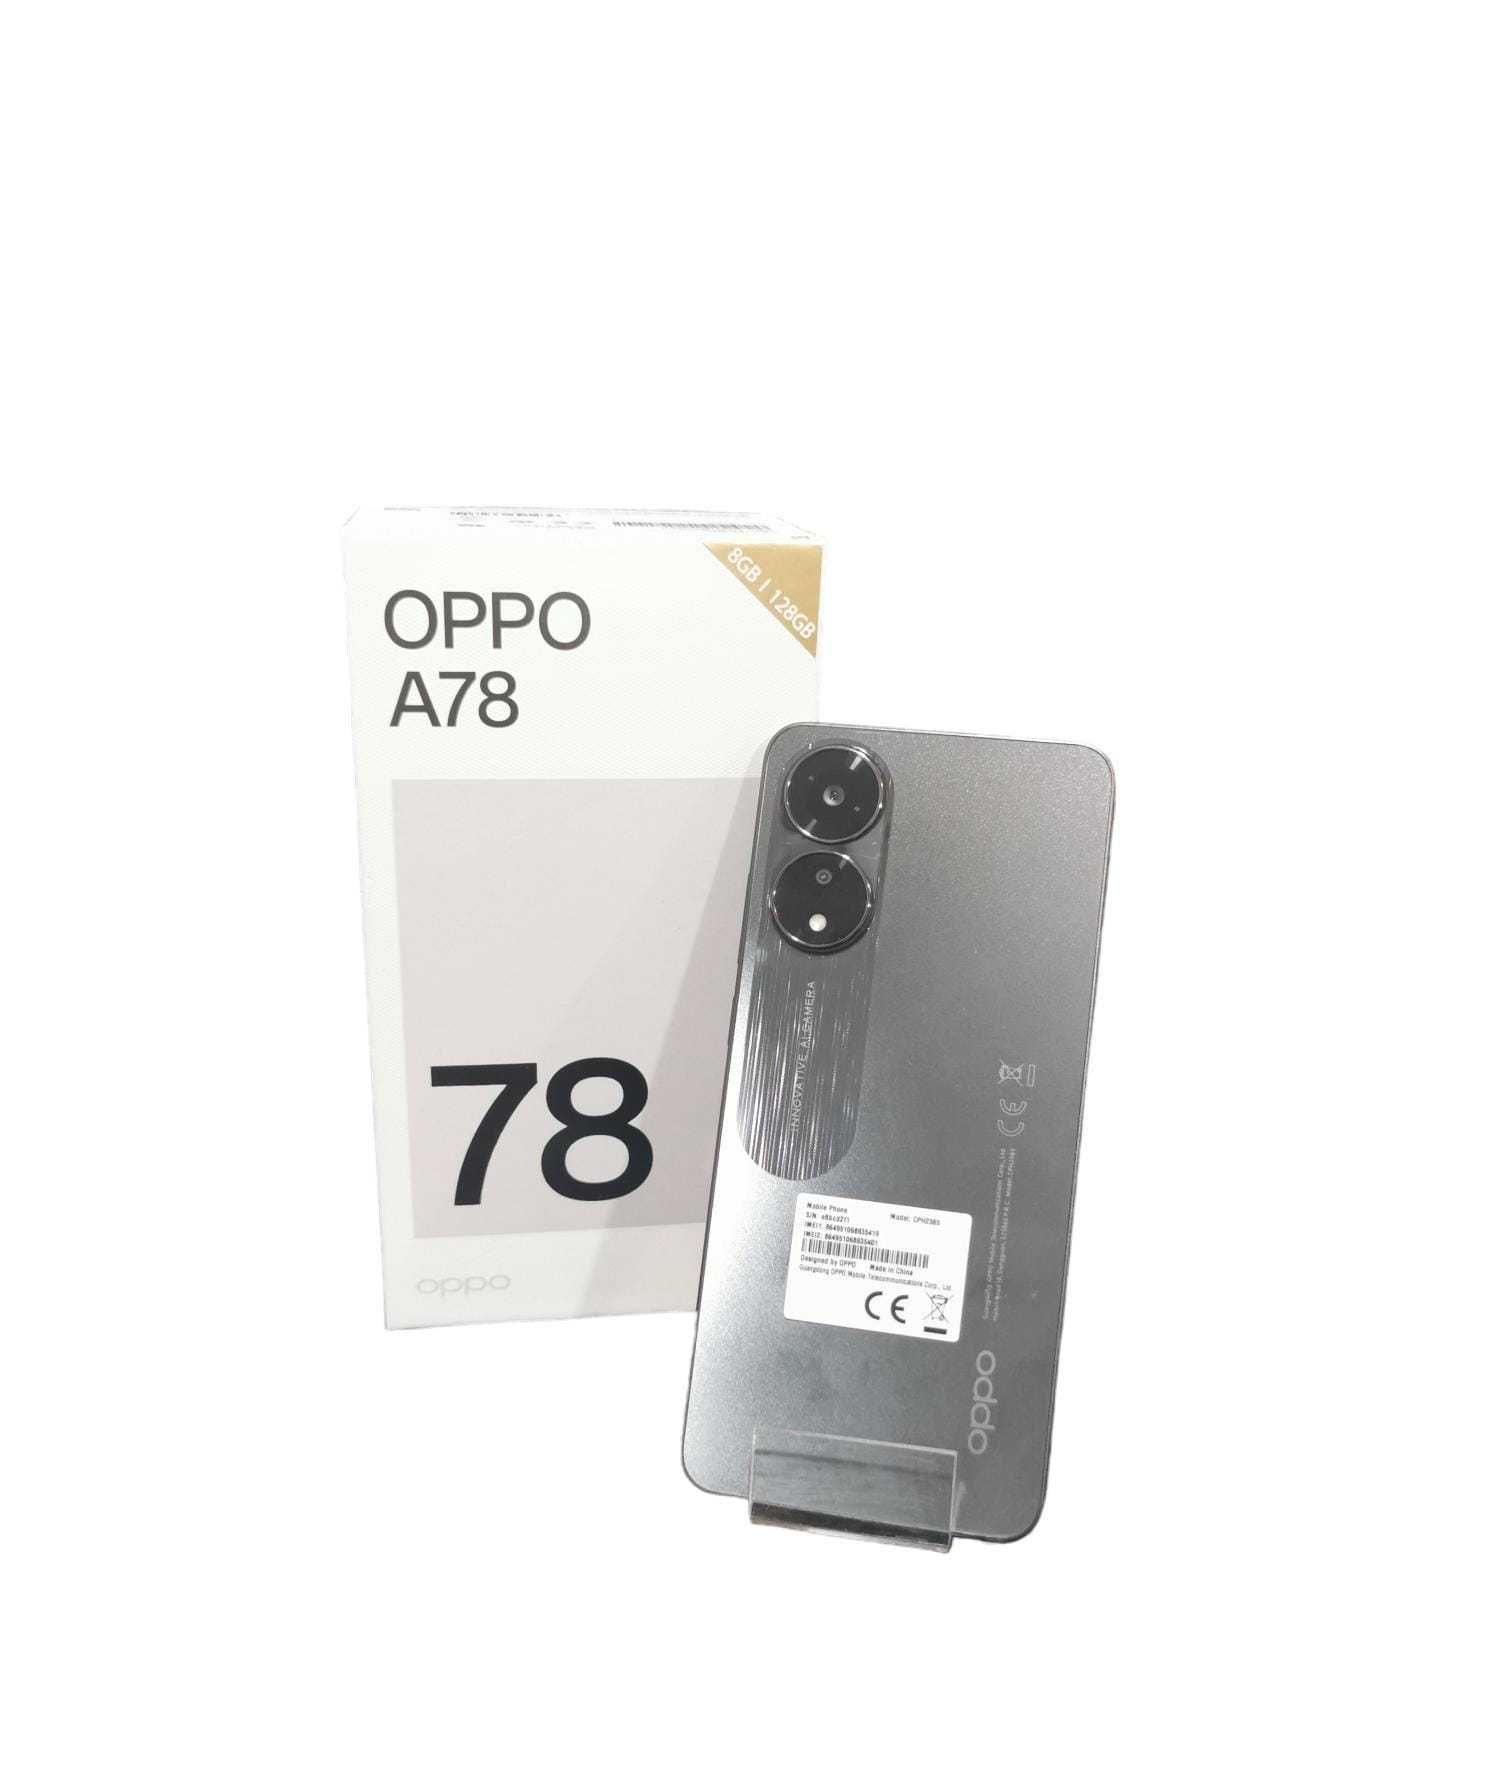 Telefon Oppo A78 Cod - 20202 / Amanet Cashbook Braila